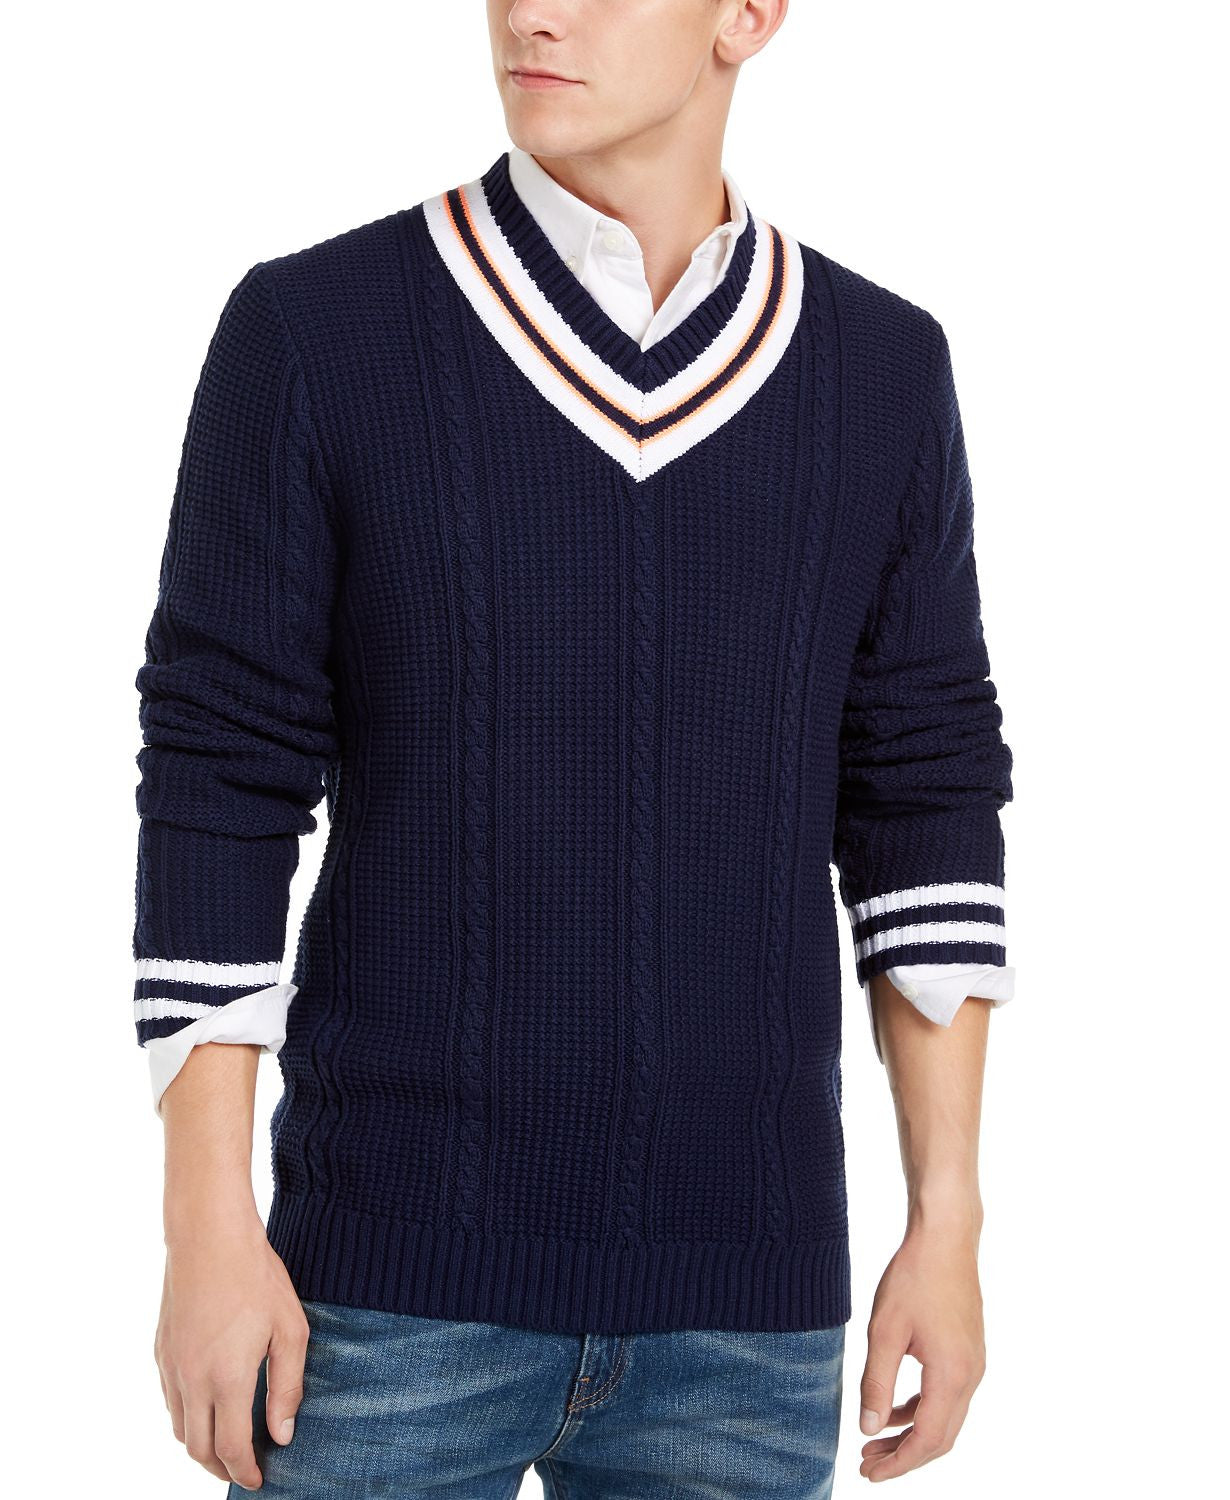 Club Room Textured Cricket Sweater Navy Blue